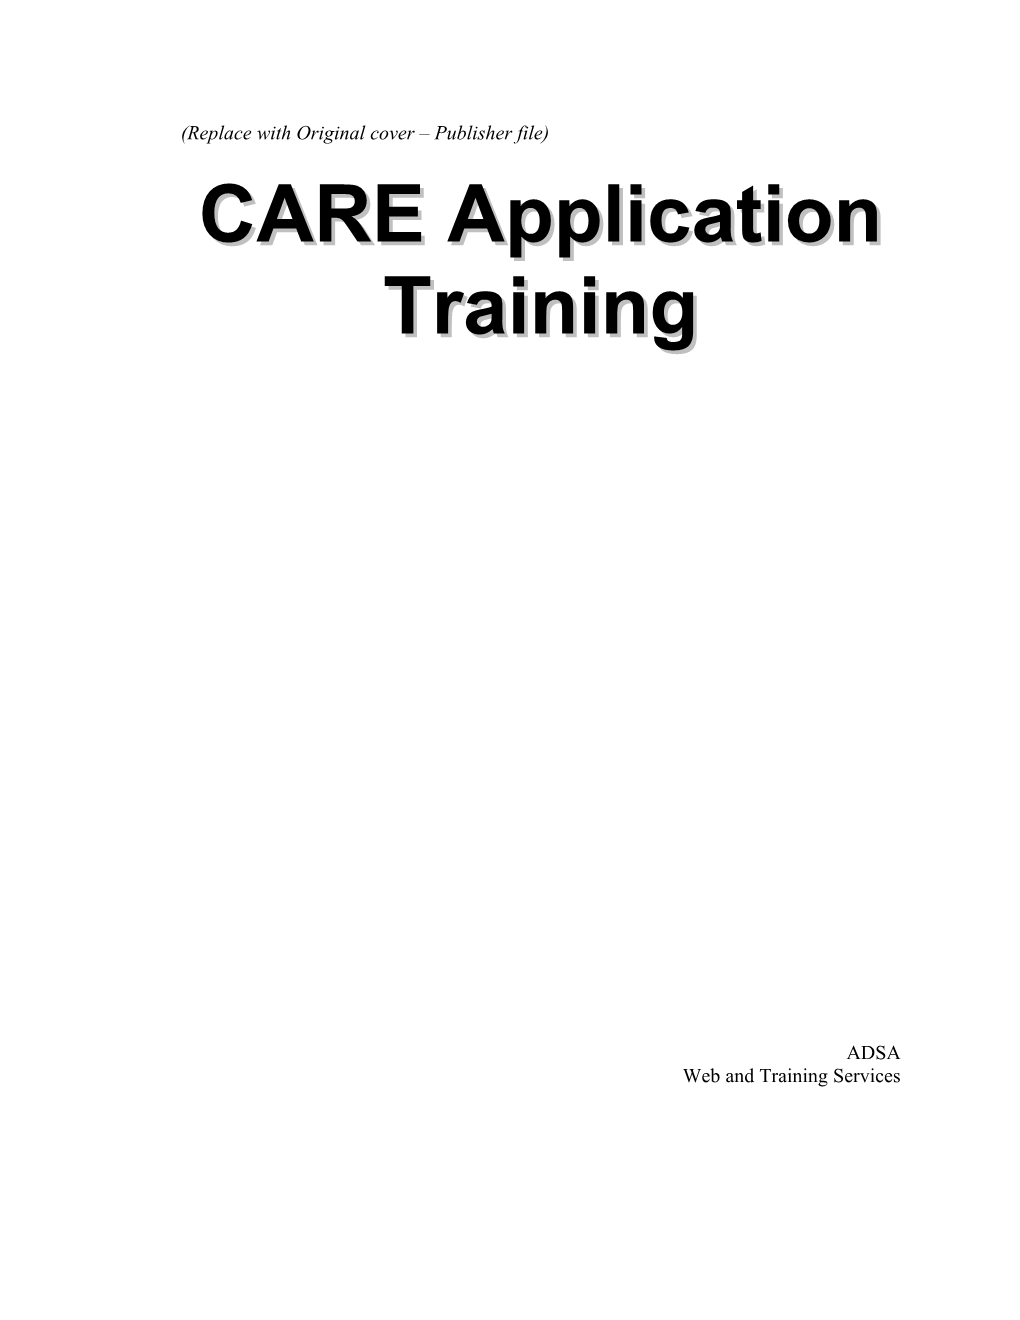 CARE Application Training